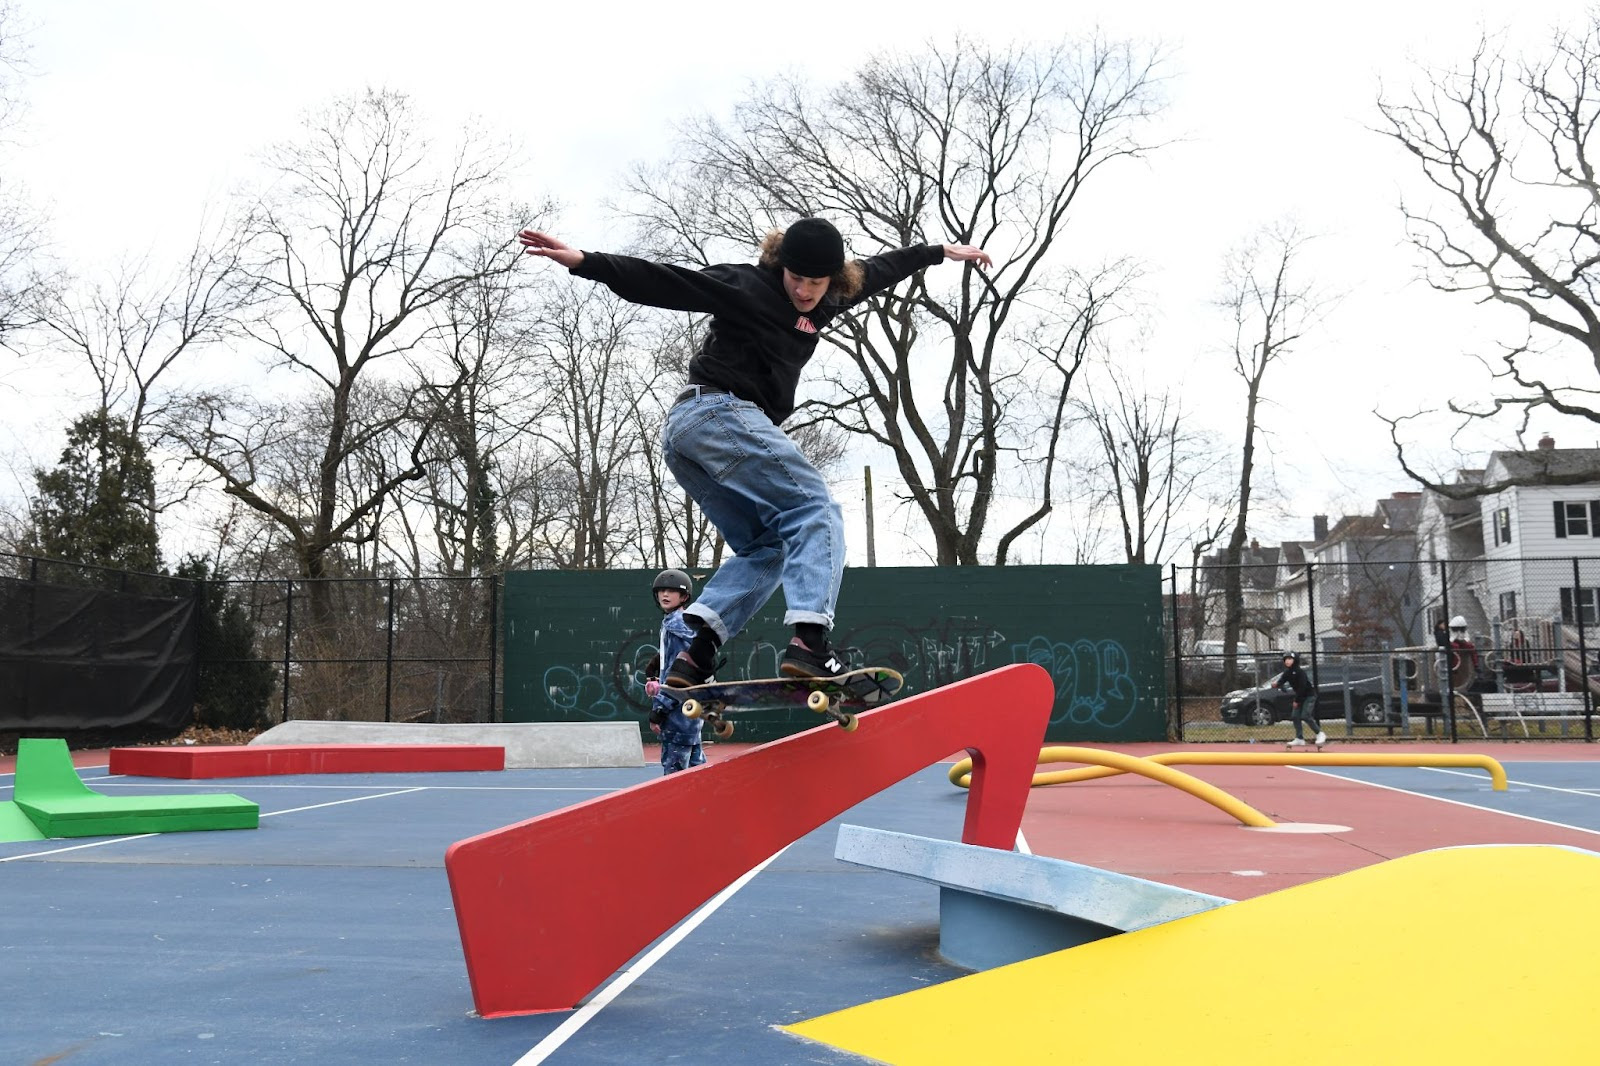 Skateboarder statue popping up in Brooklyn Bridge Park